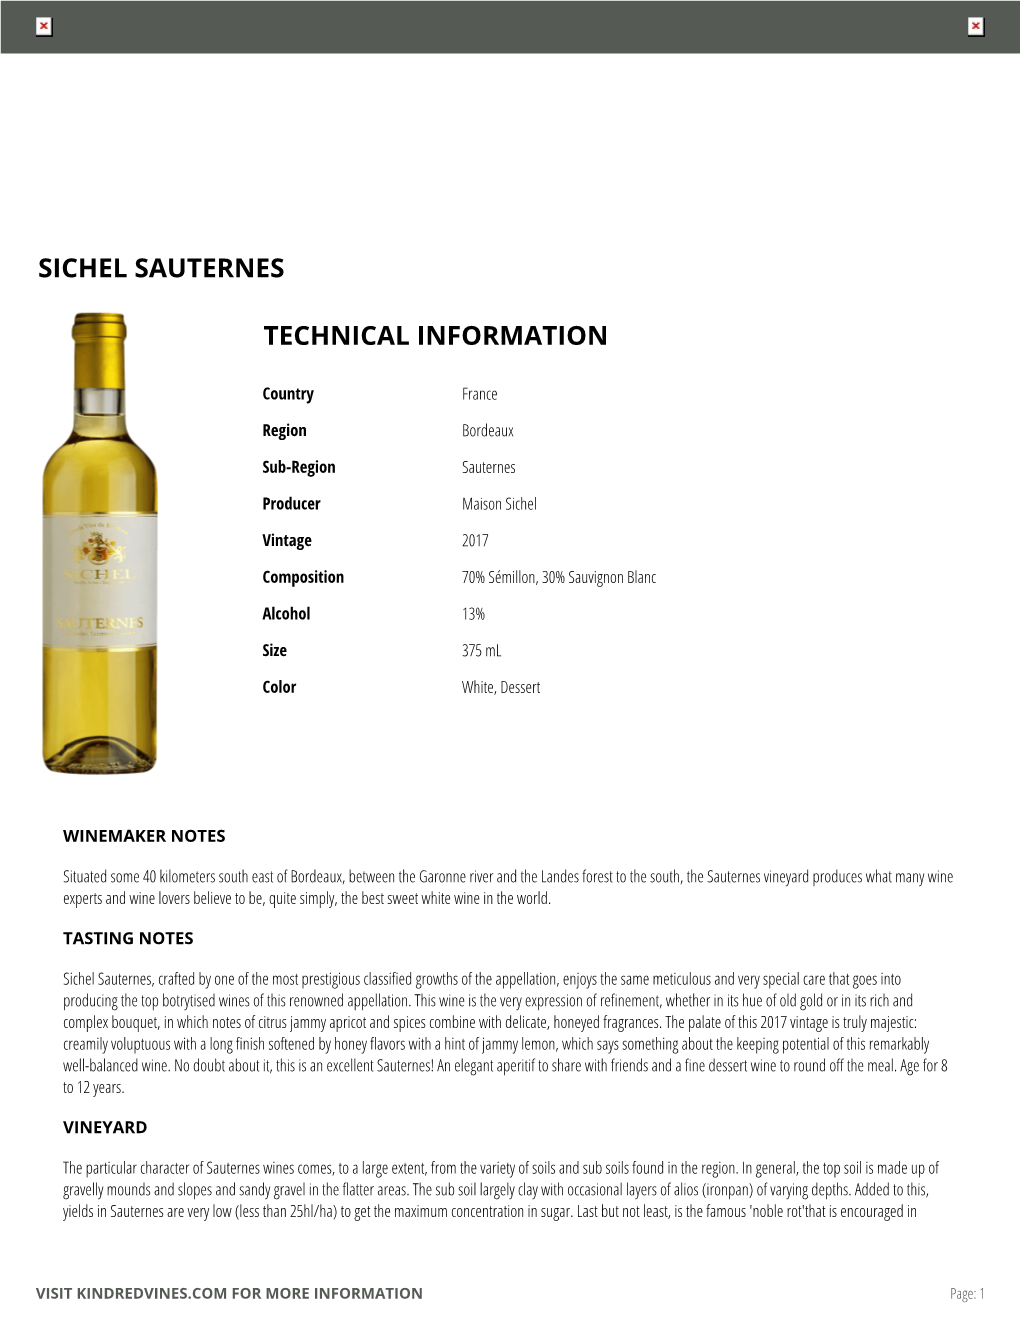 Sichel Sauternes Technical Information